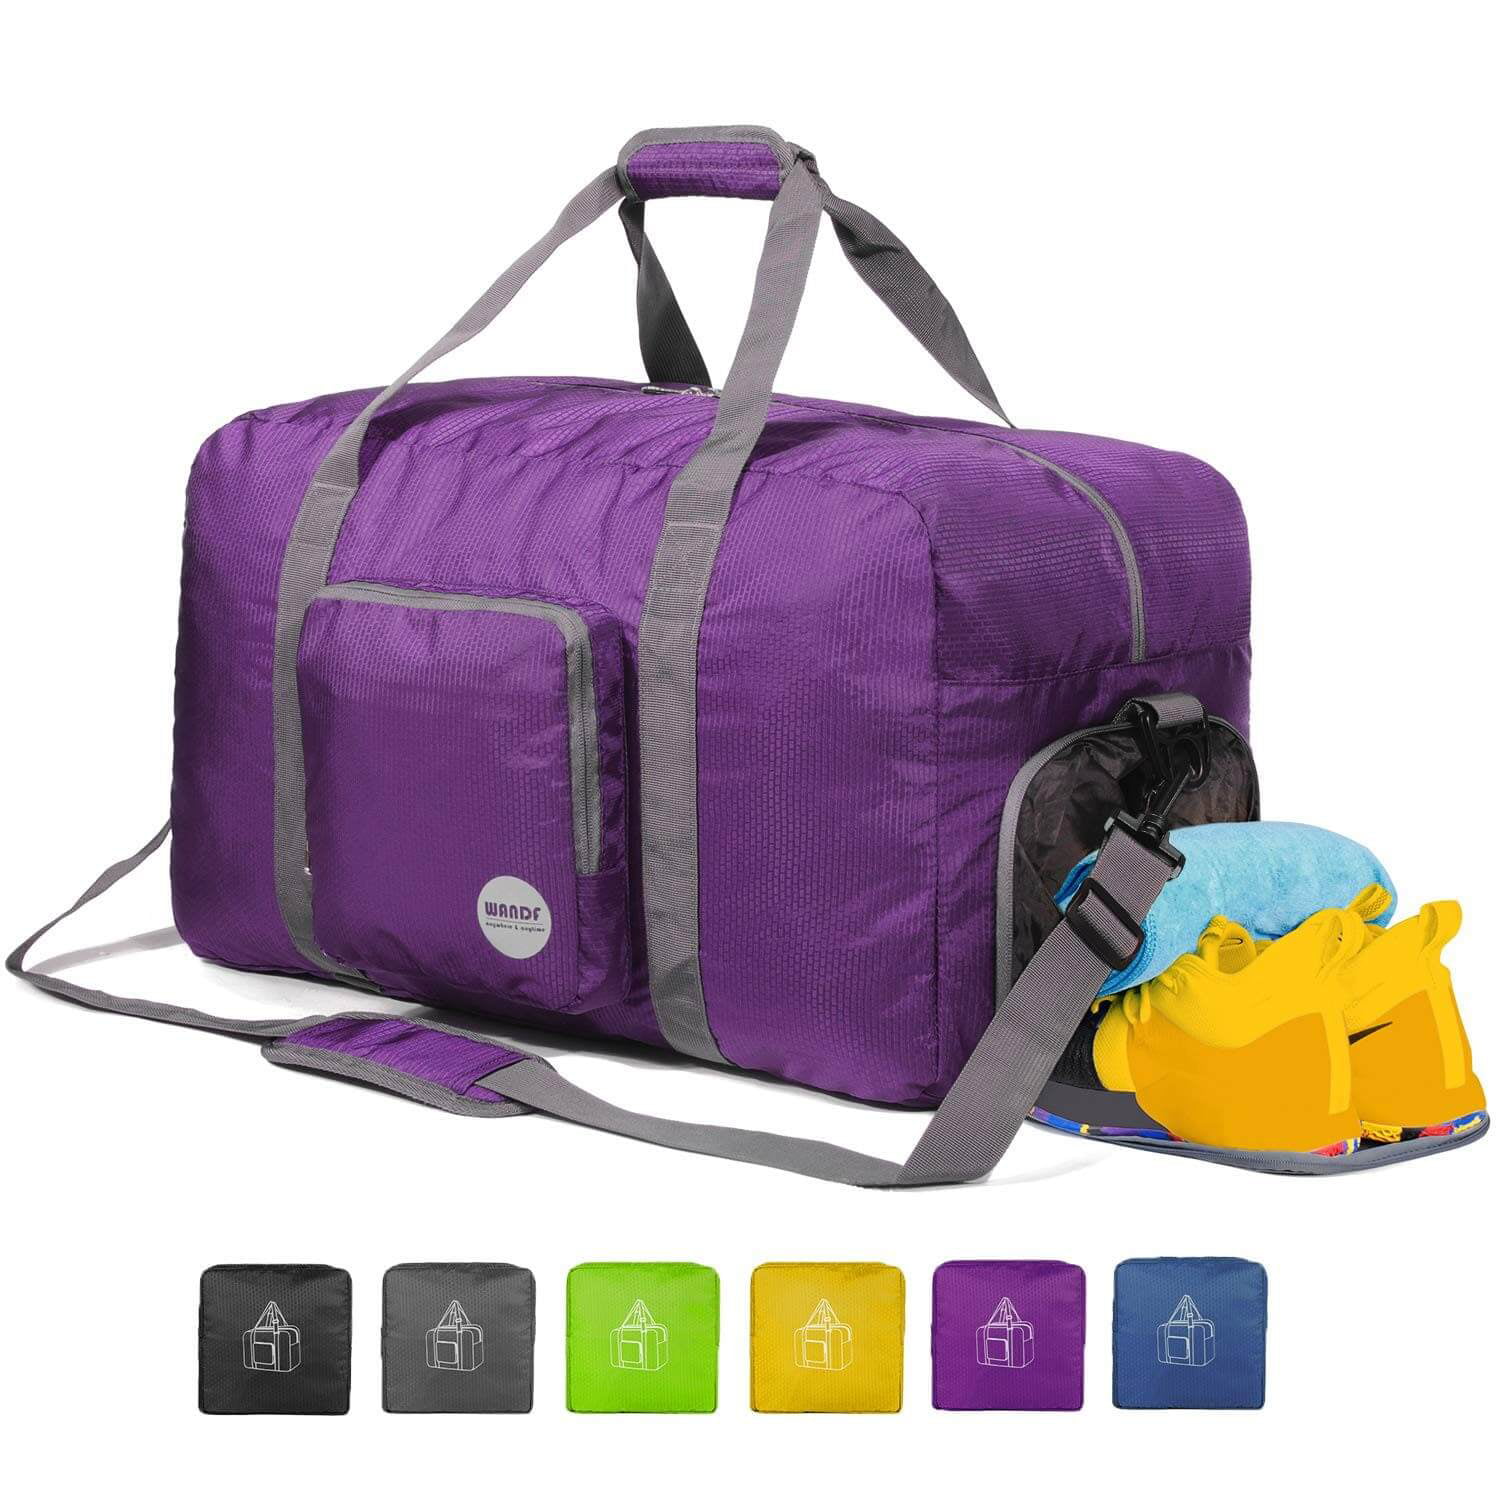 WANDF Foldable Duffle Bag 24"(60L) Lightweight Luggage